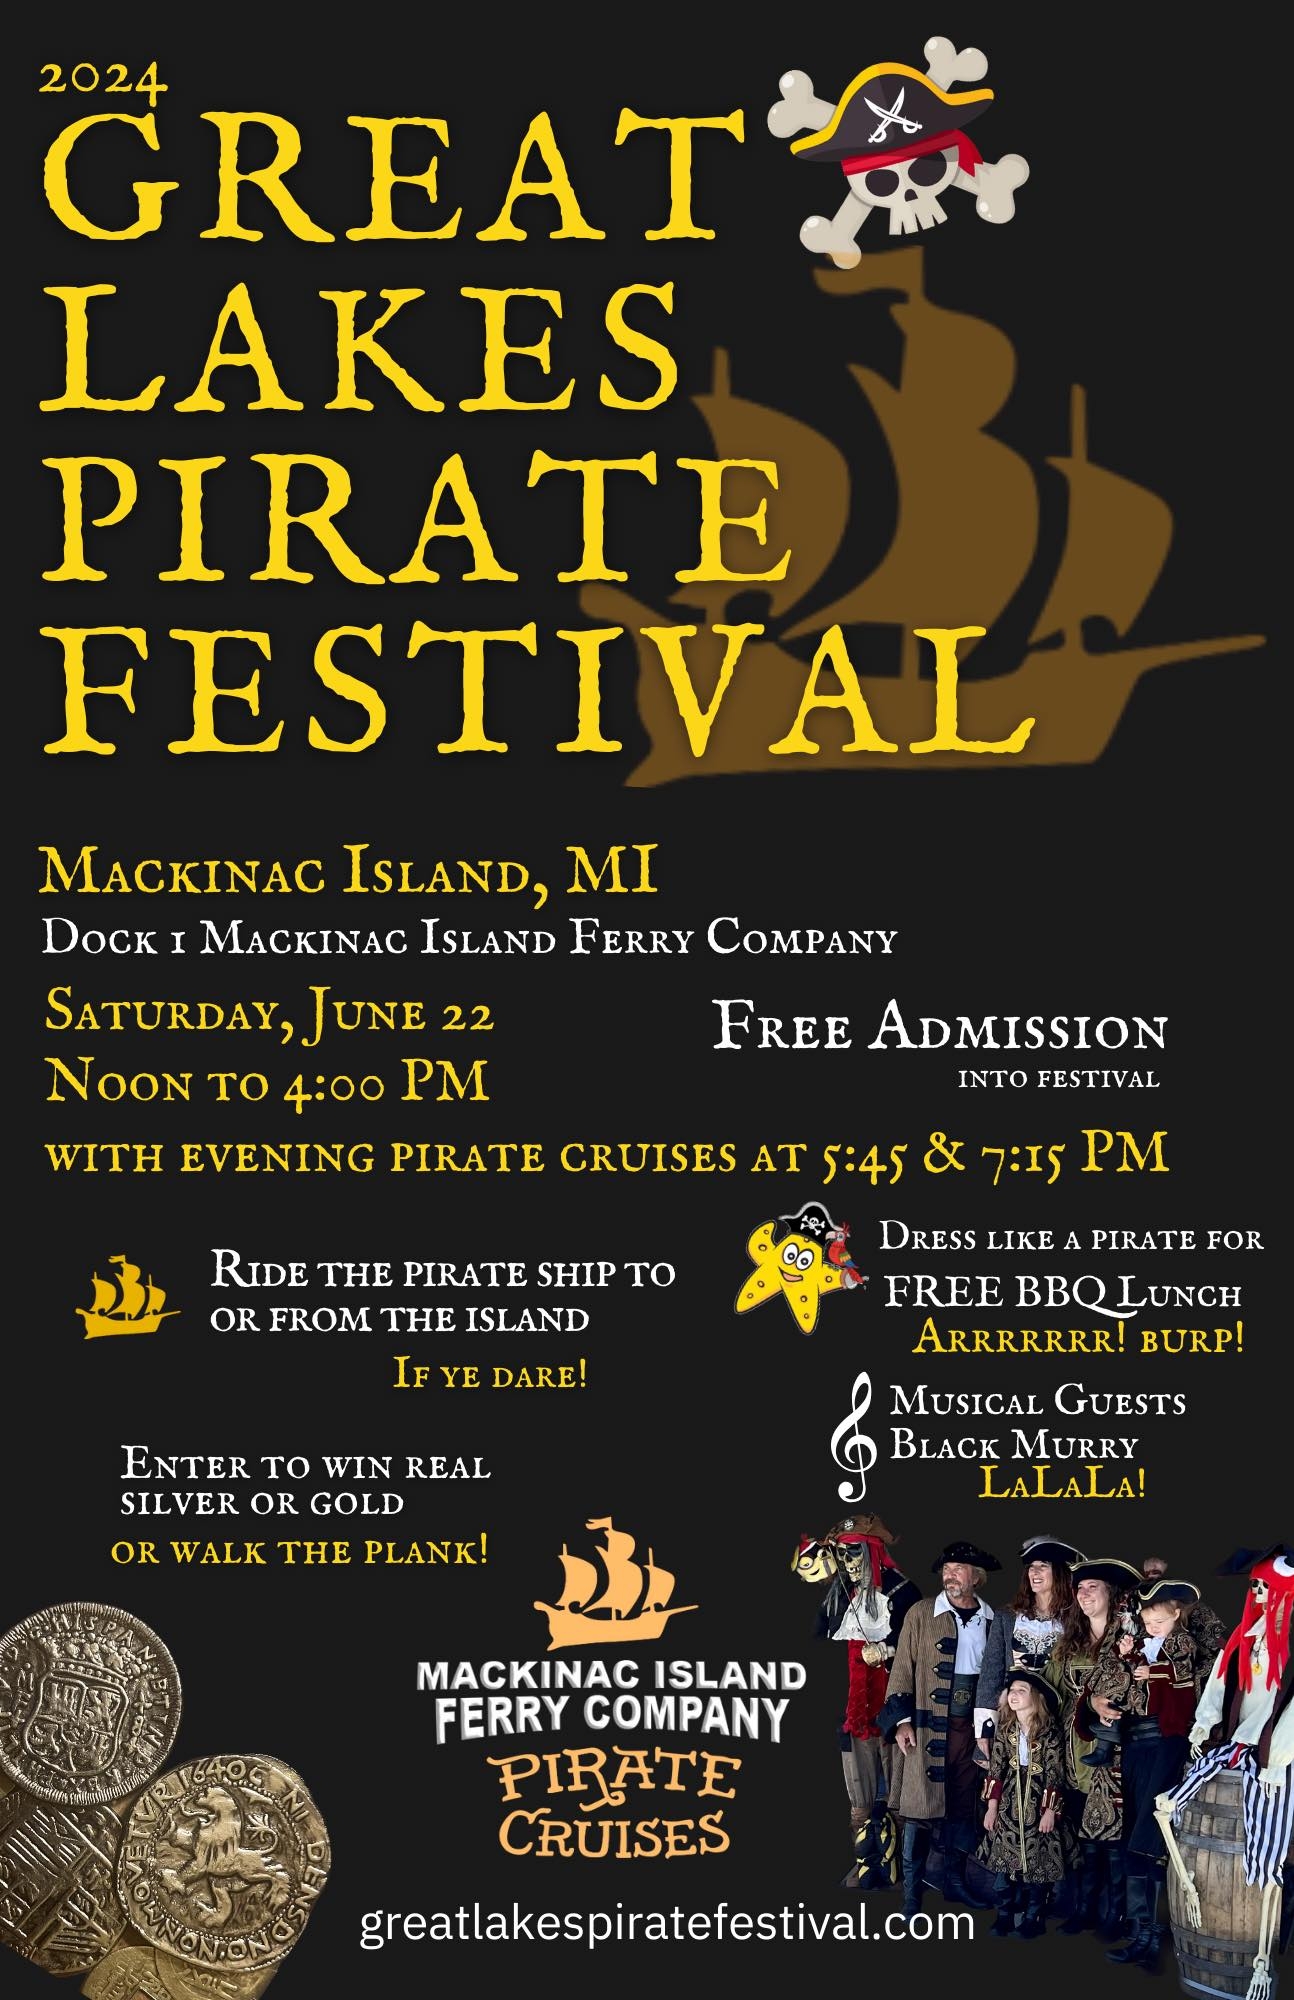 Great Lakes Pirate Festival - Mackinac Island, MI